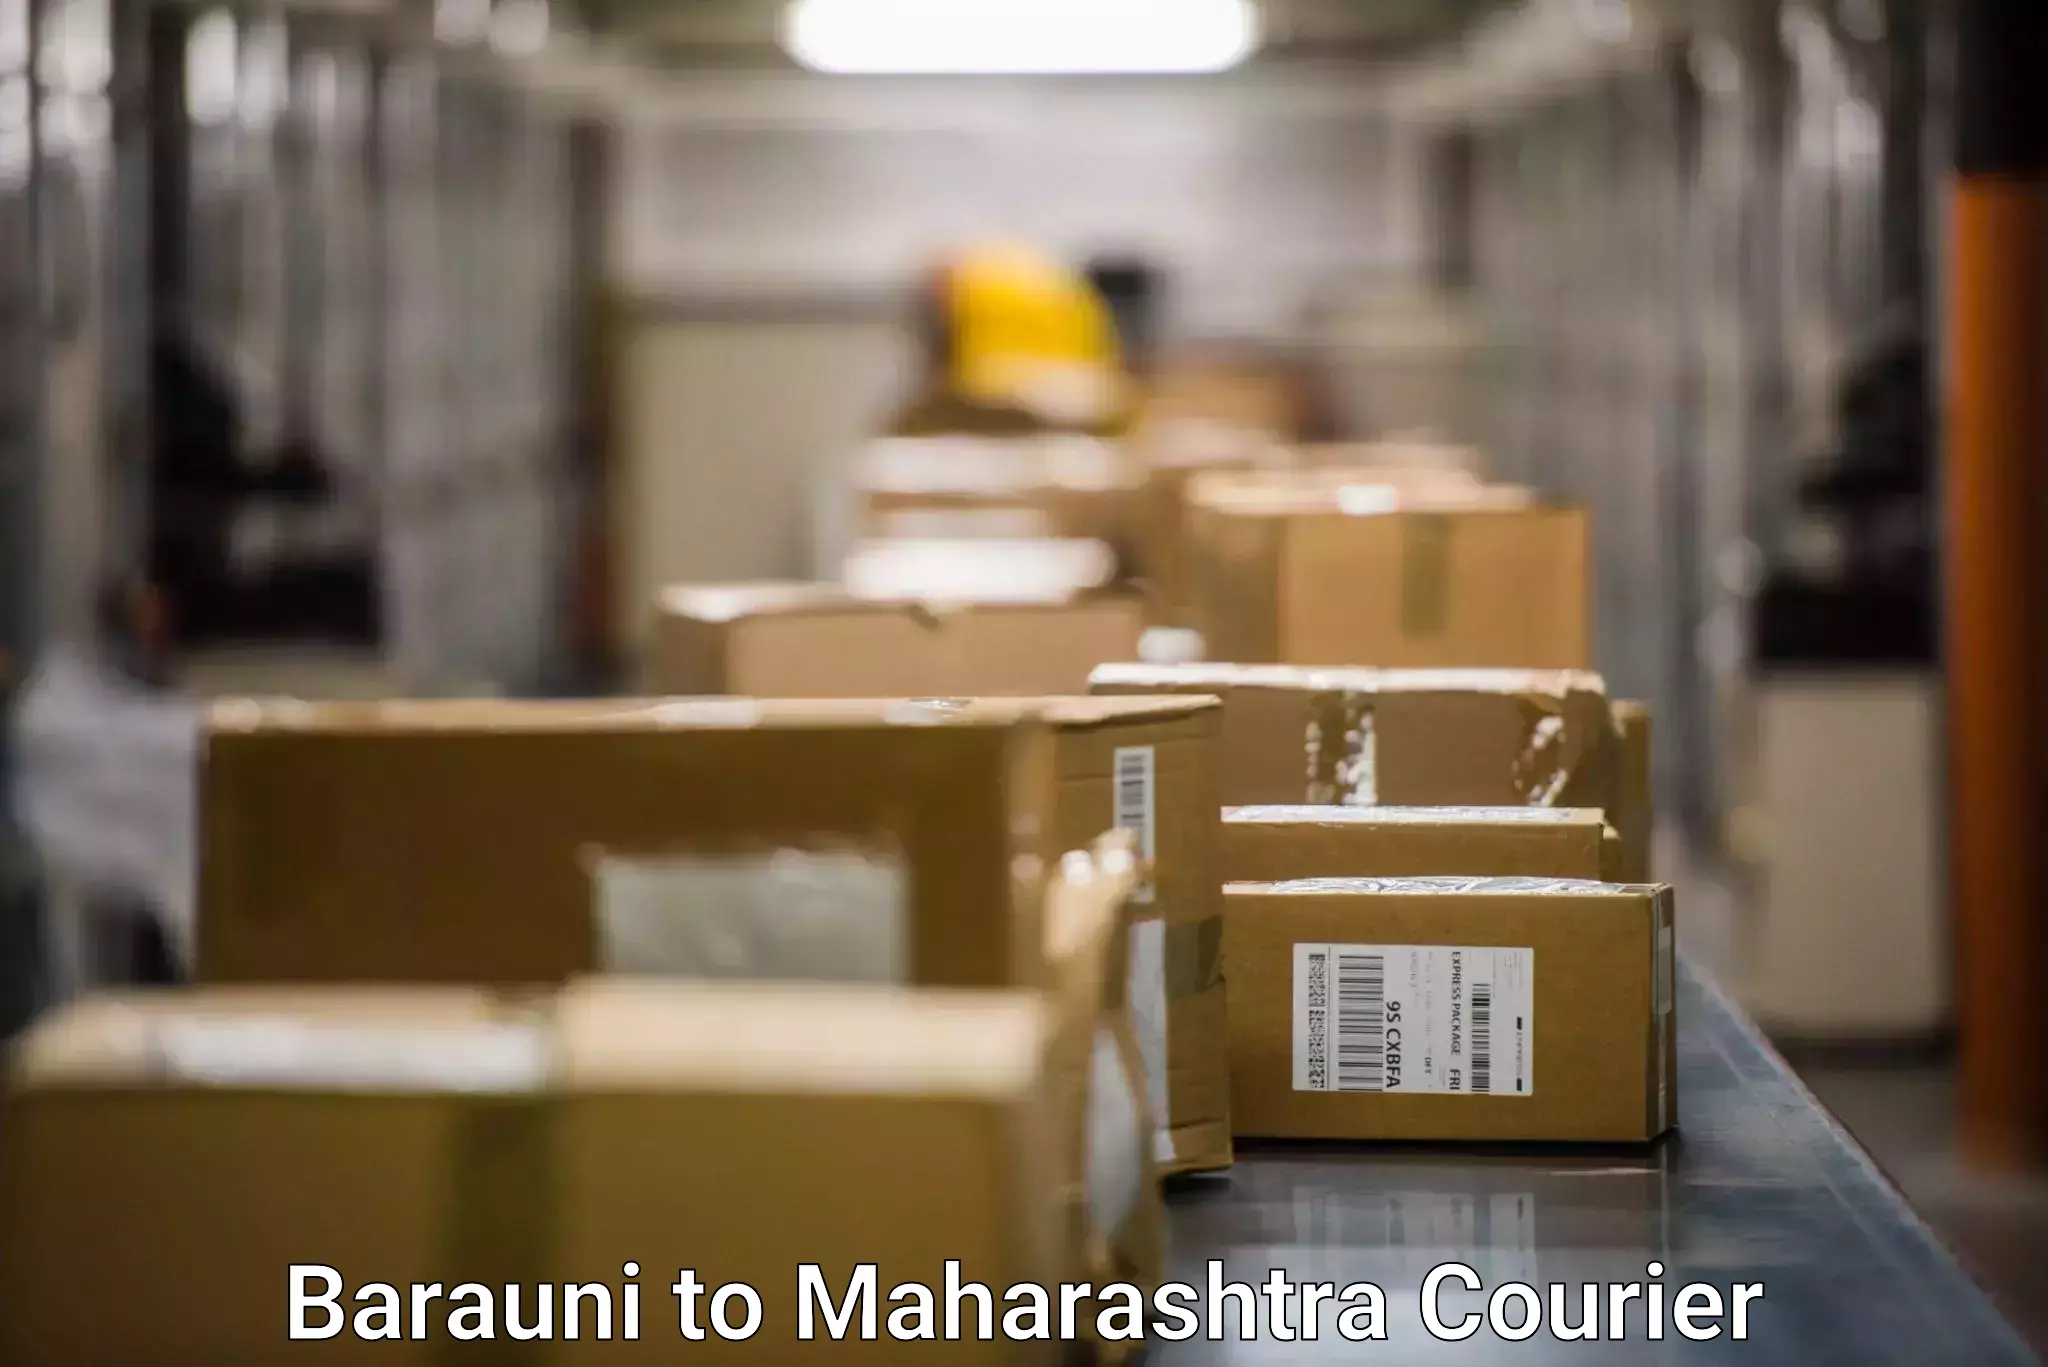 Package delivery network Barauni to Mumbai University